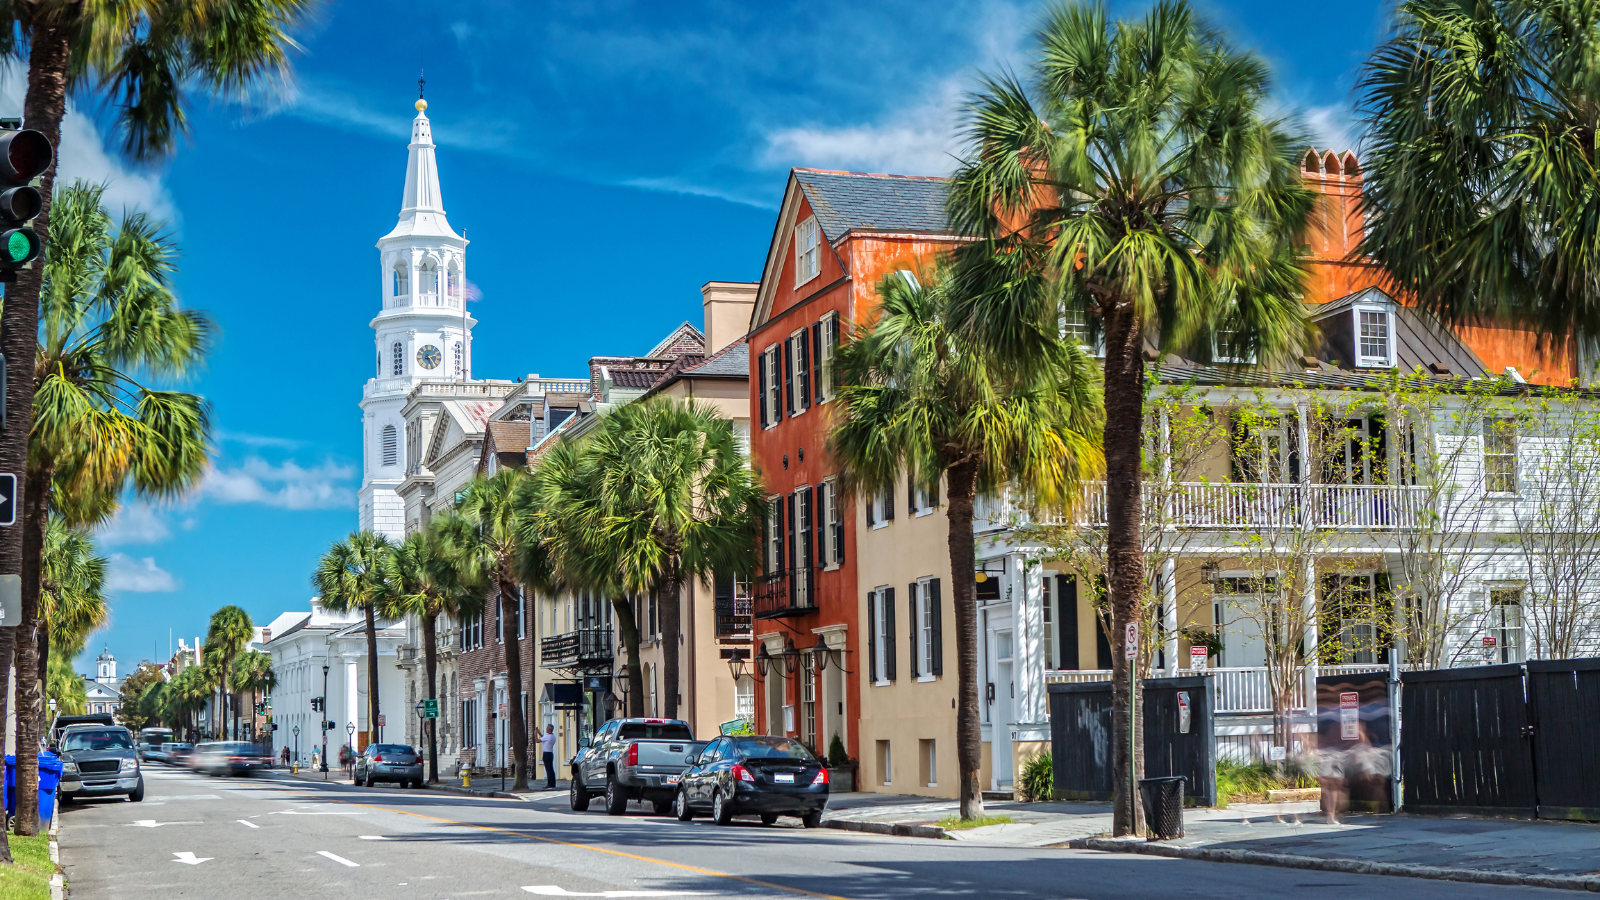 Explore Charleston's historic district, where the Fulton Lane Inn is located.